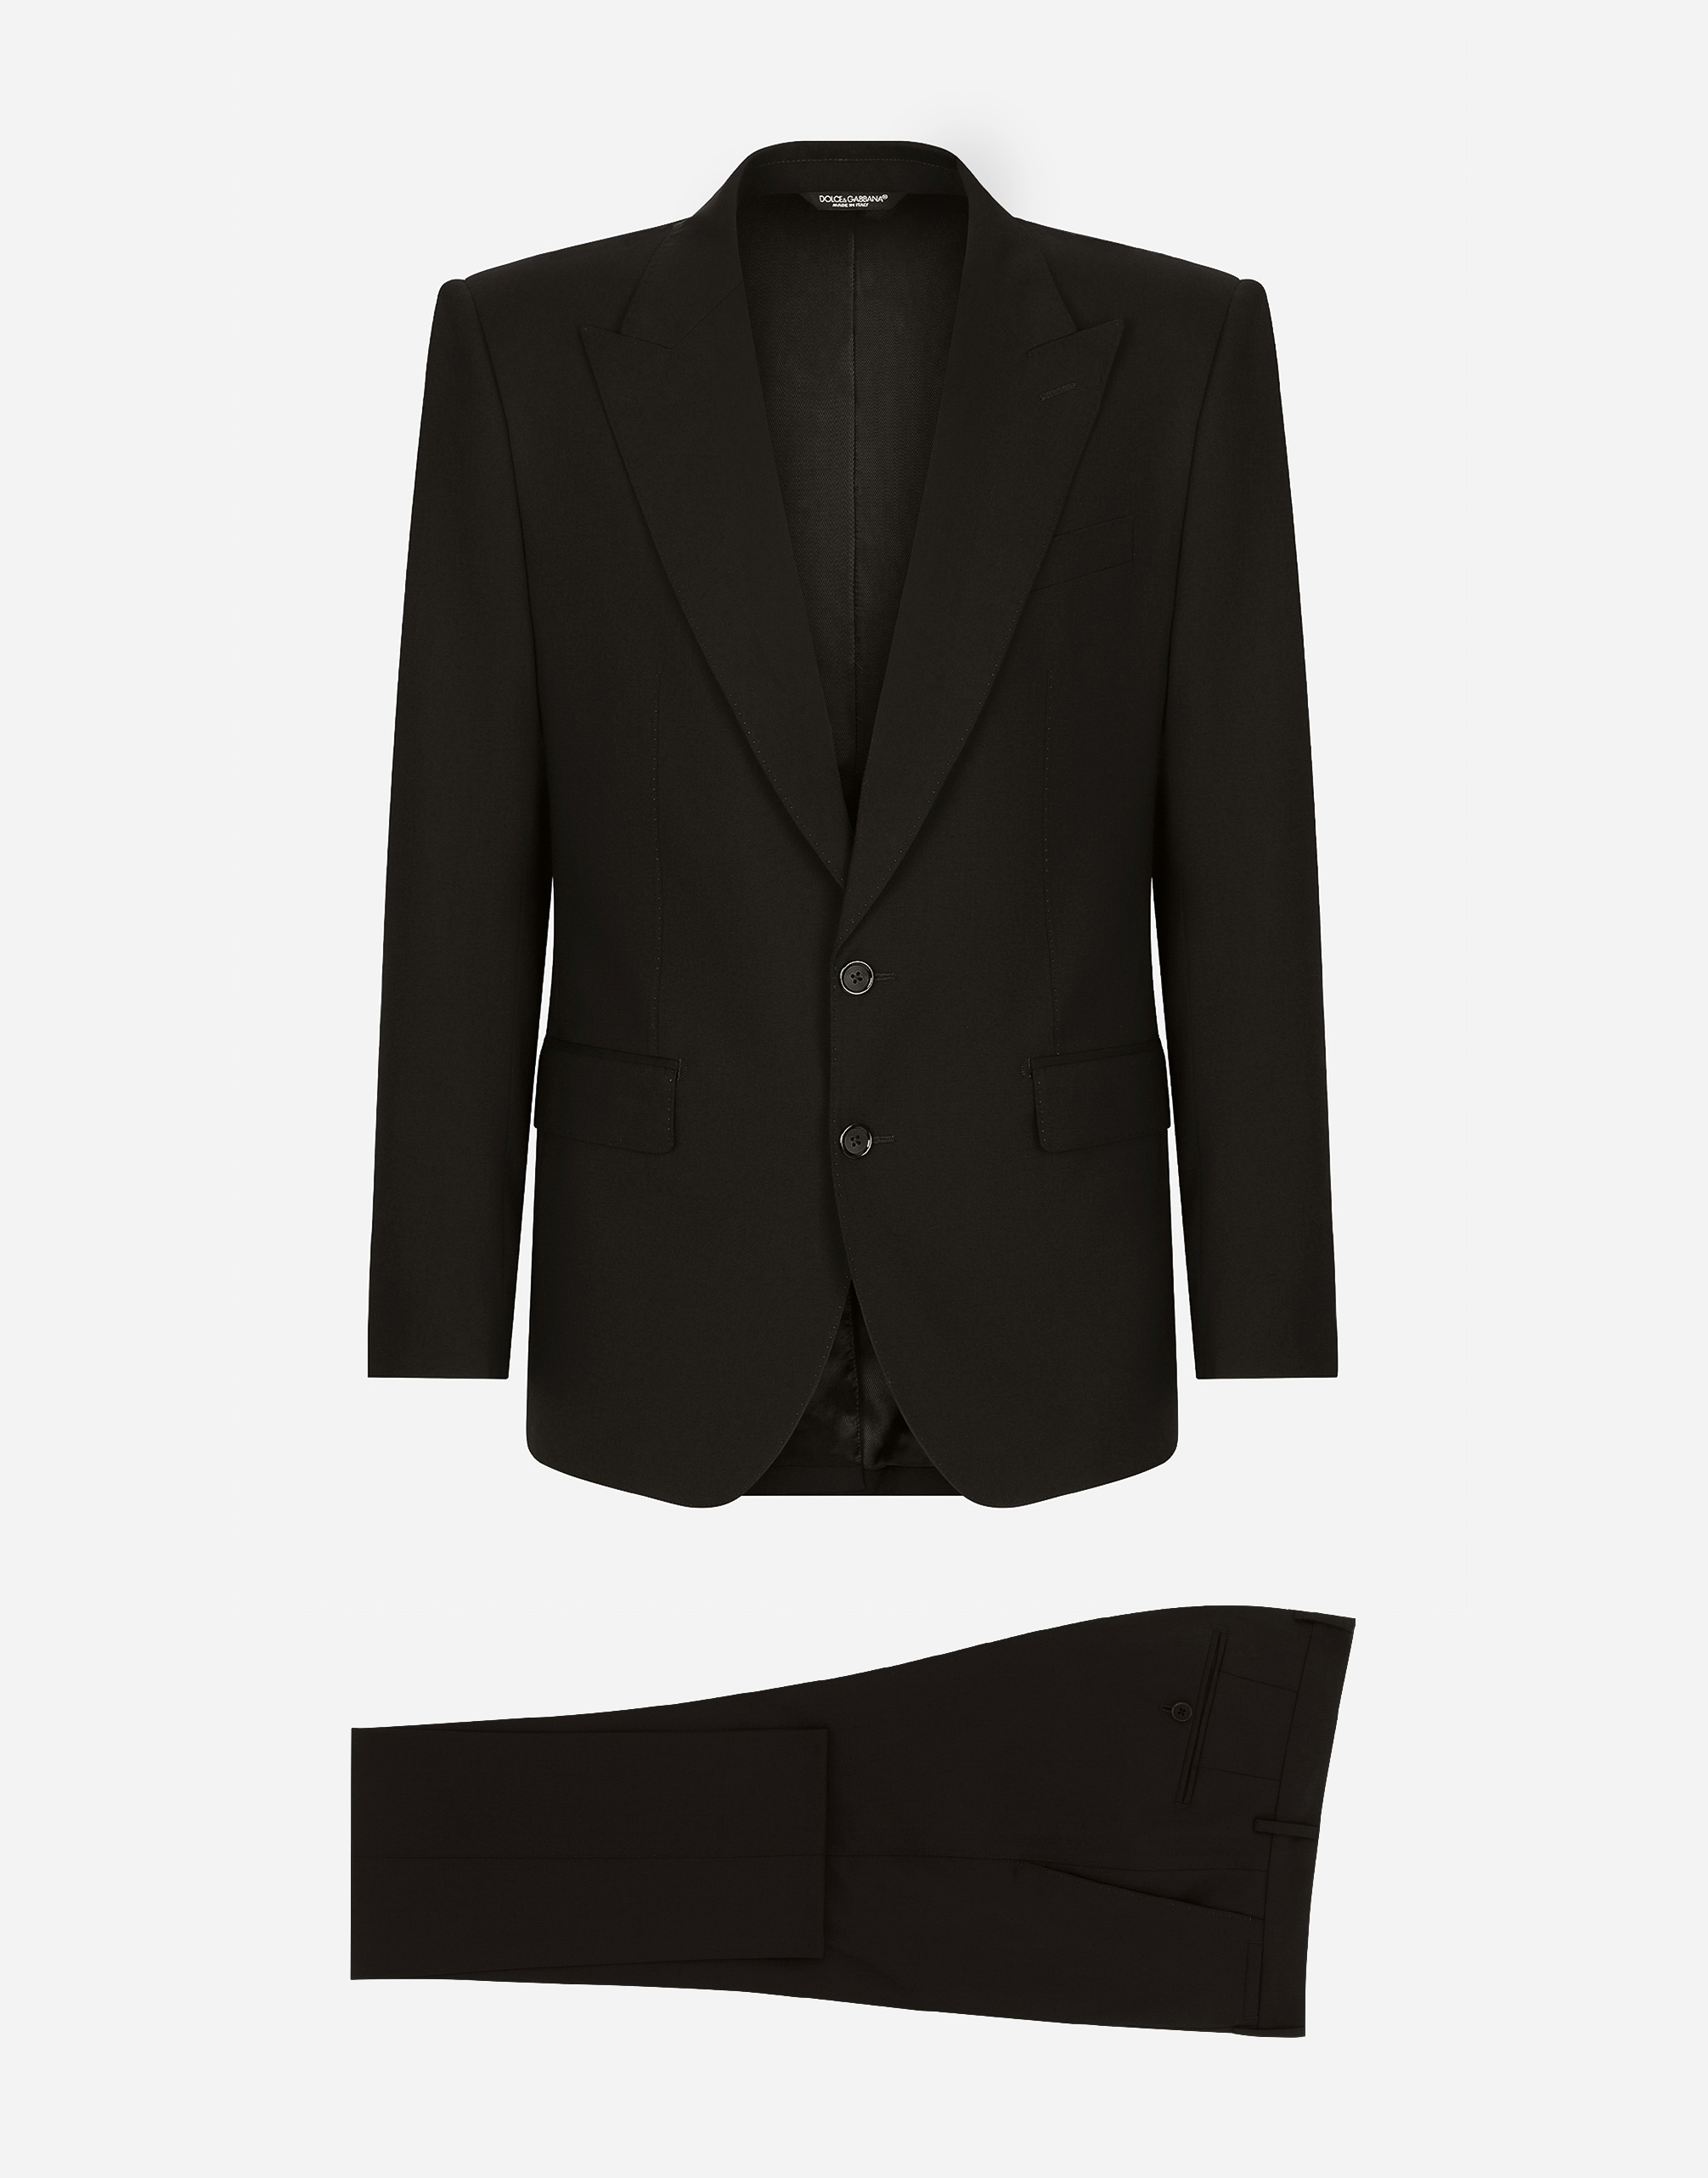 Dolce & Gabbana Men's Brown Two Button Three Piece Suit